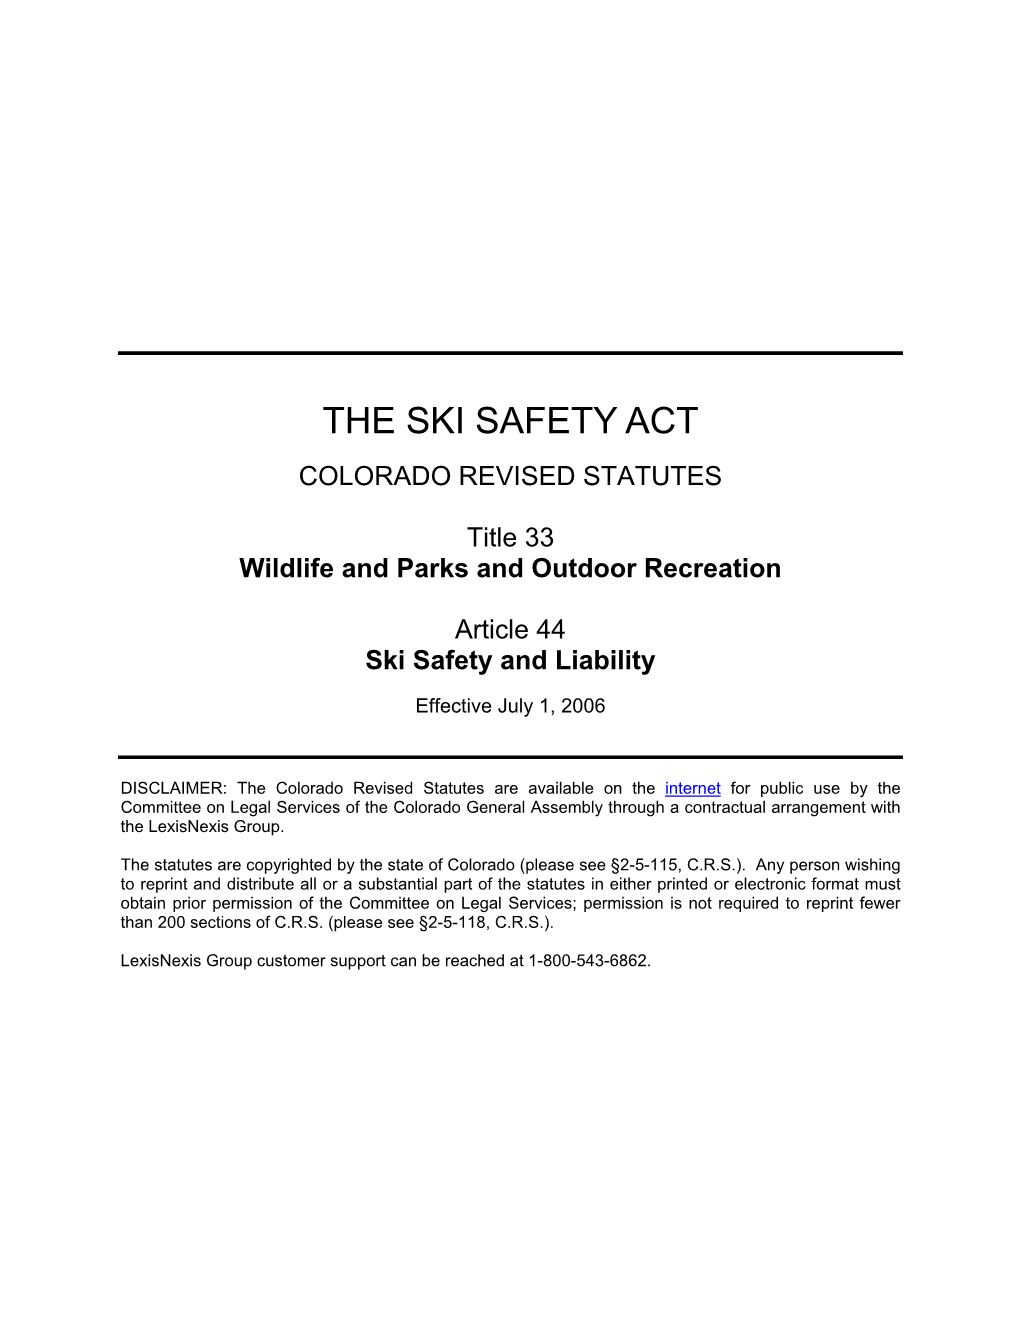 The Ski Safety Act